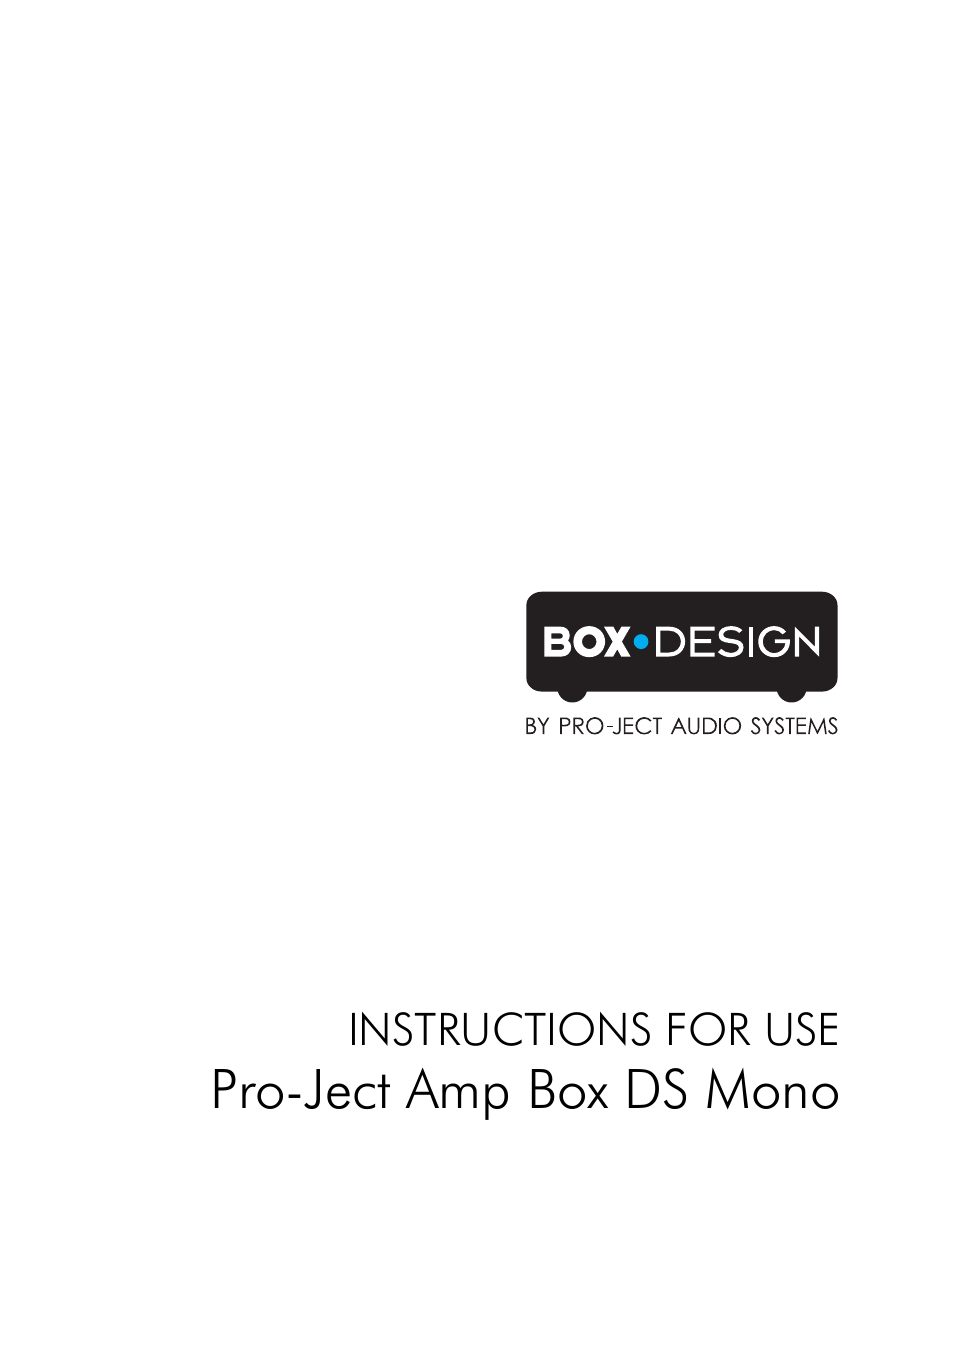 Amp Box DS Mono